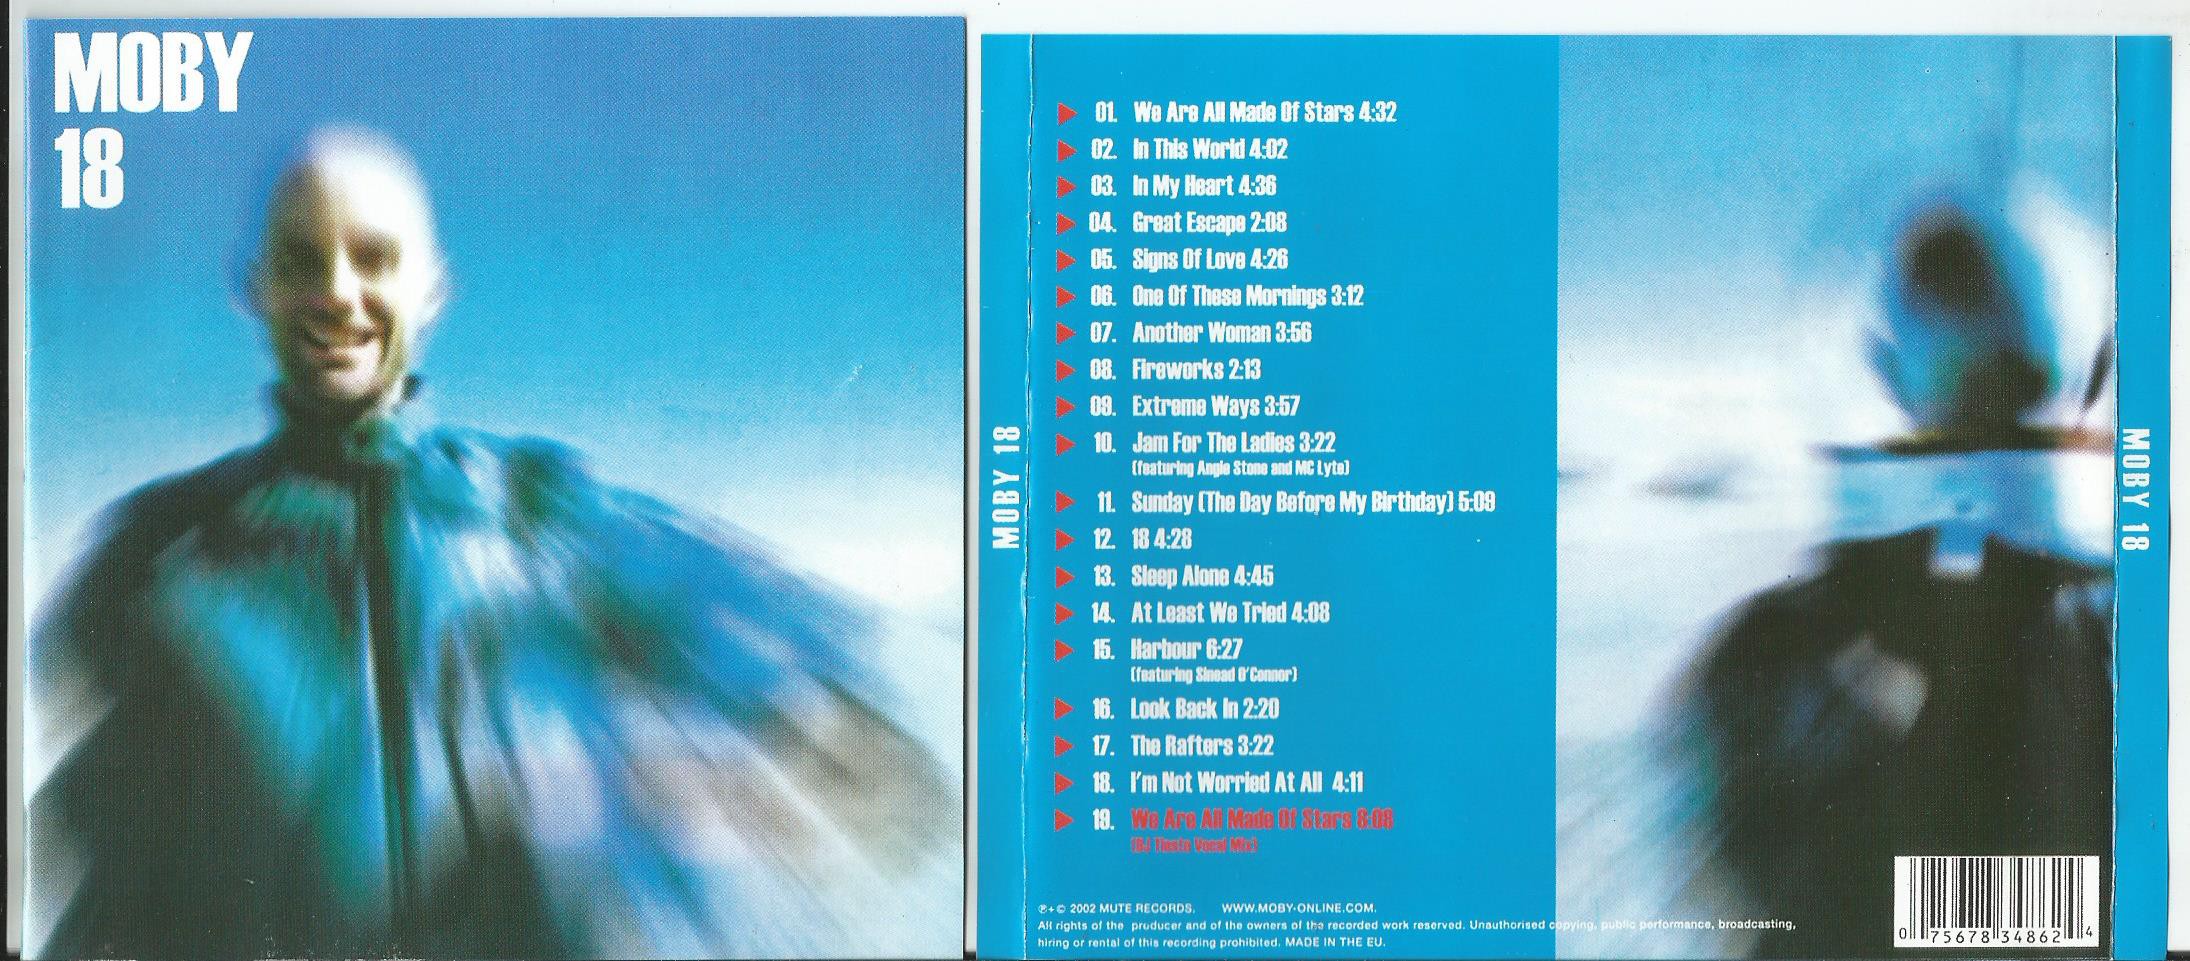 The last day moby перевод песни. Moby 18. Moby обложка. Moby "18 (CD)". Moby обложки альбомов.